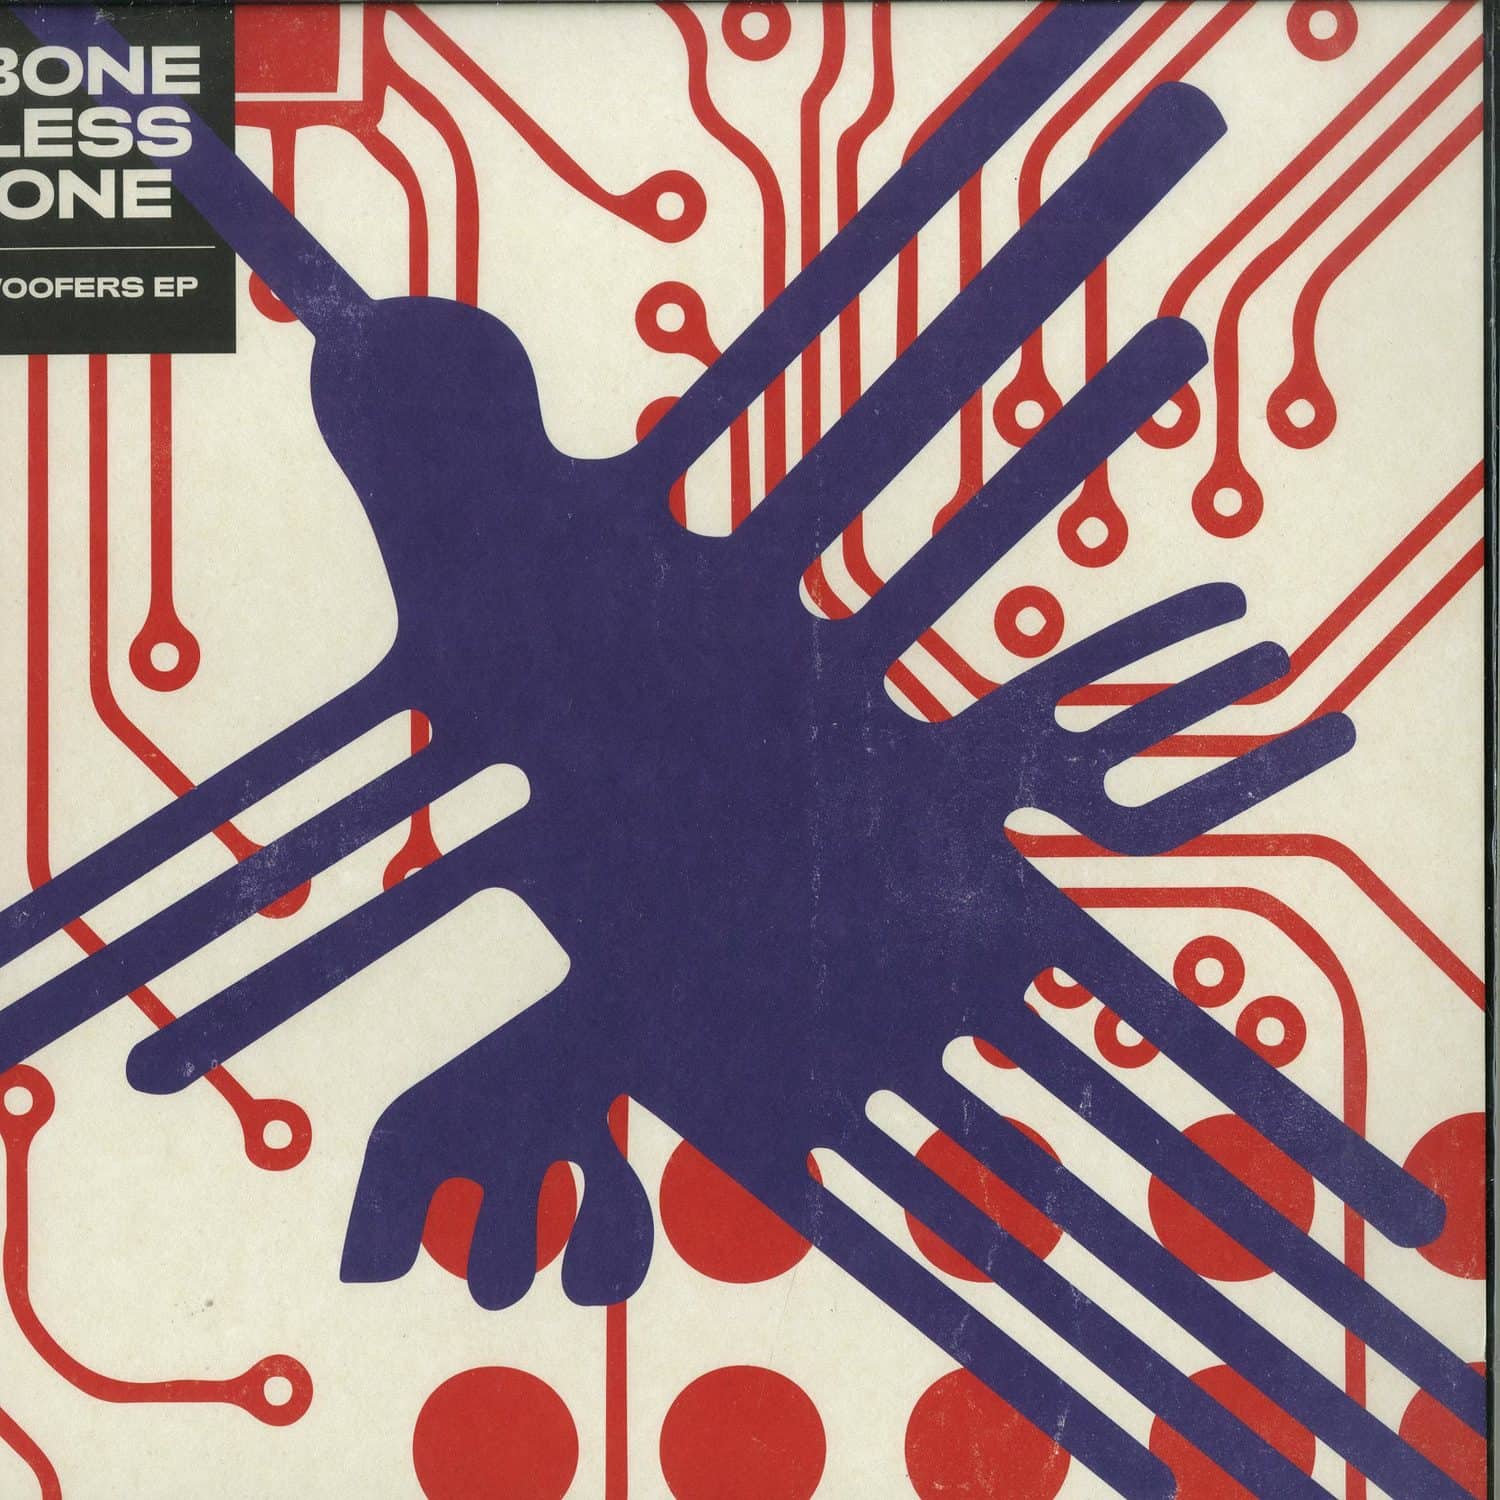 Boneless One - WOOFERS EP